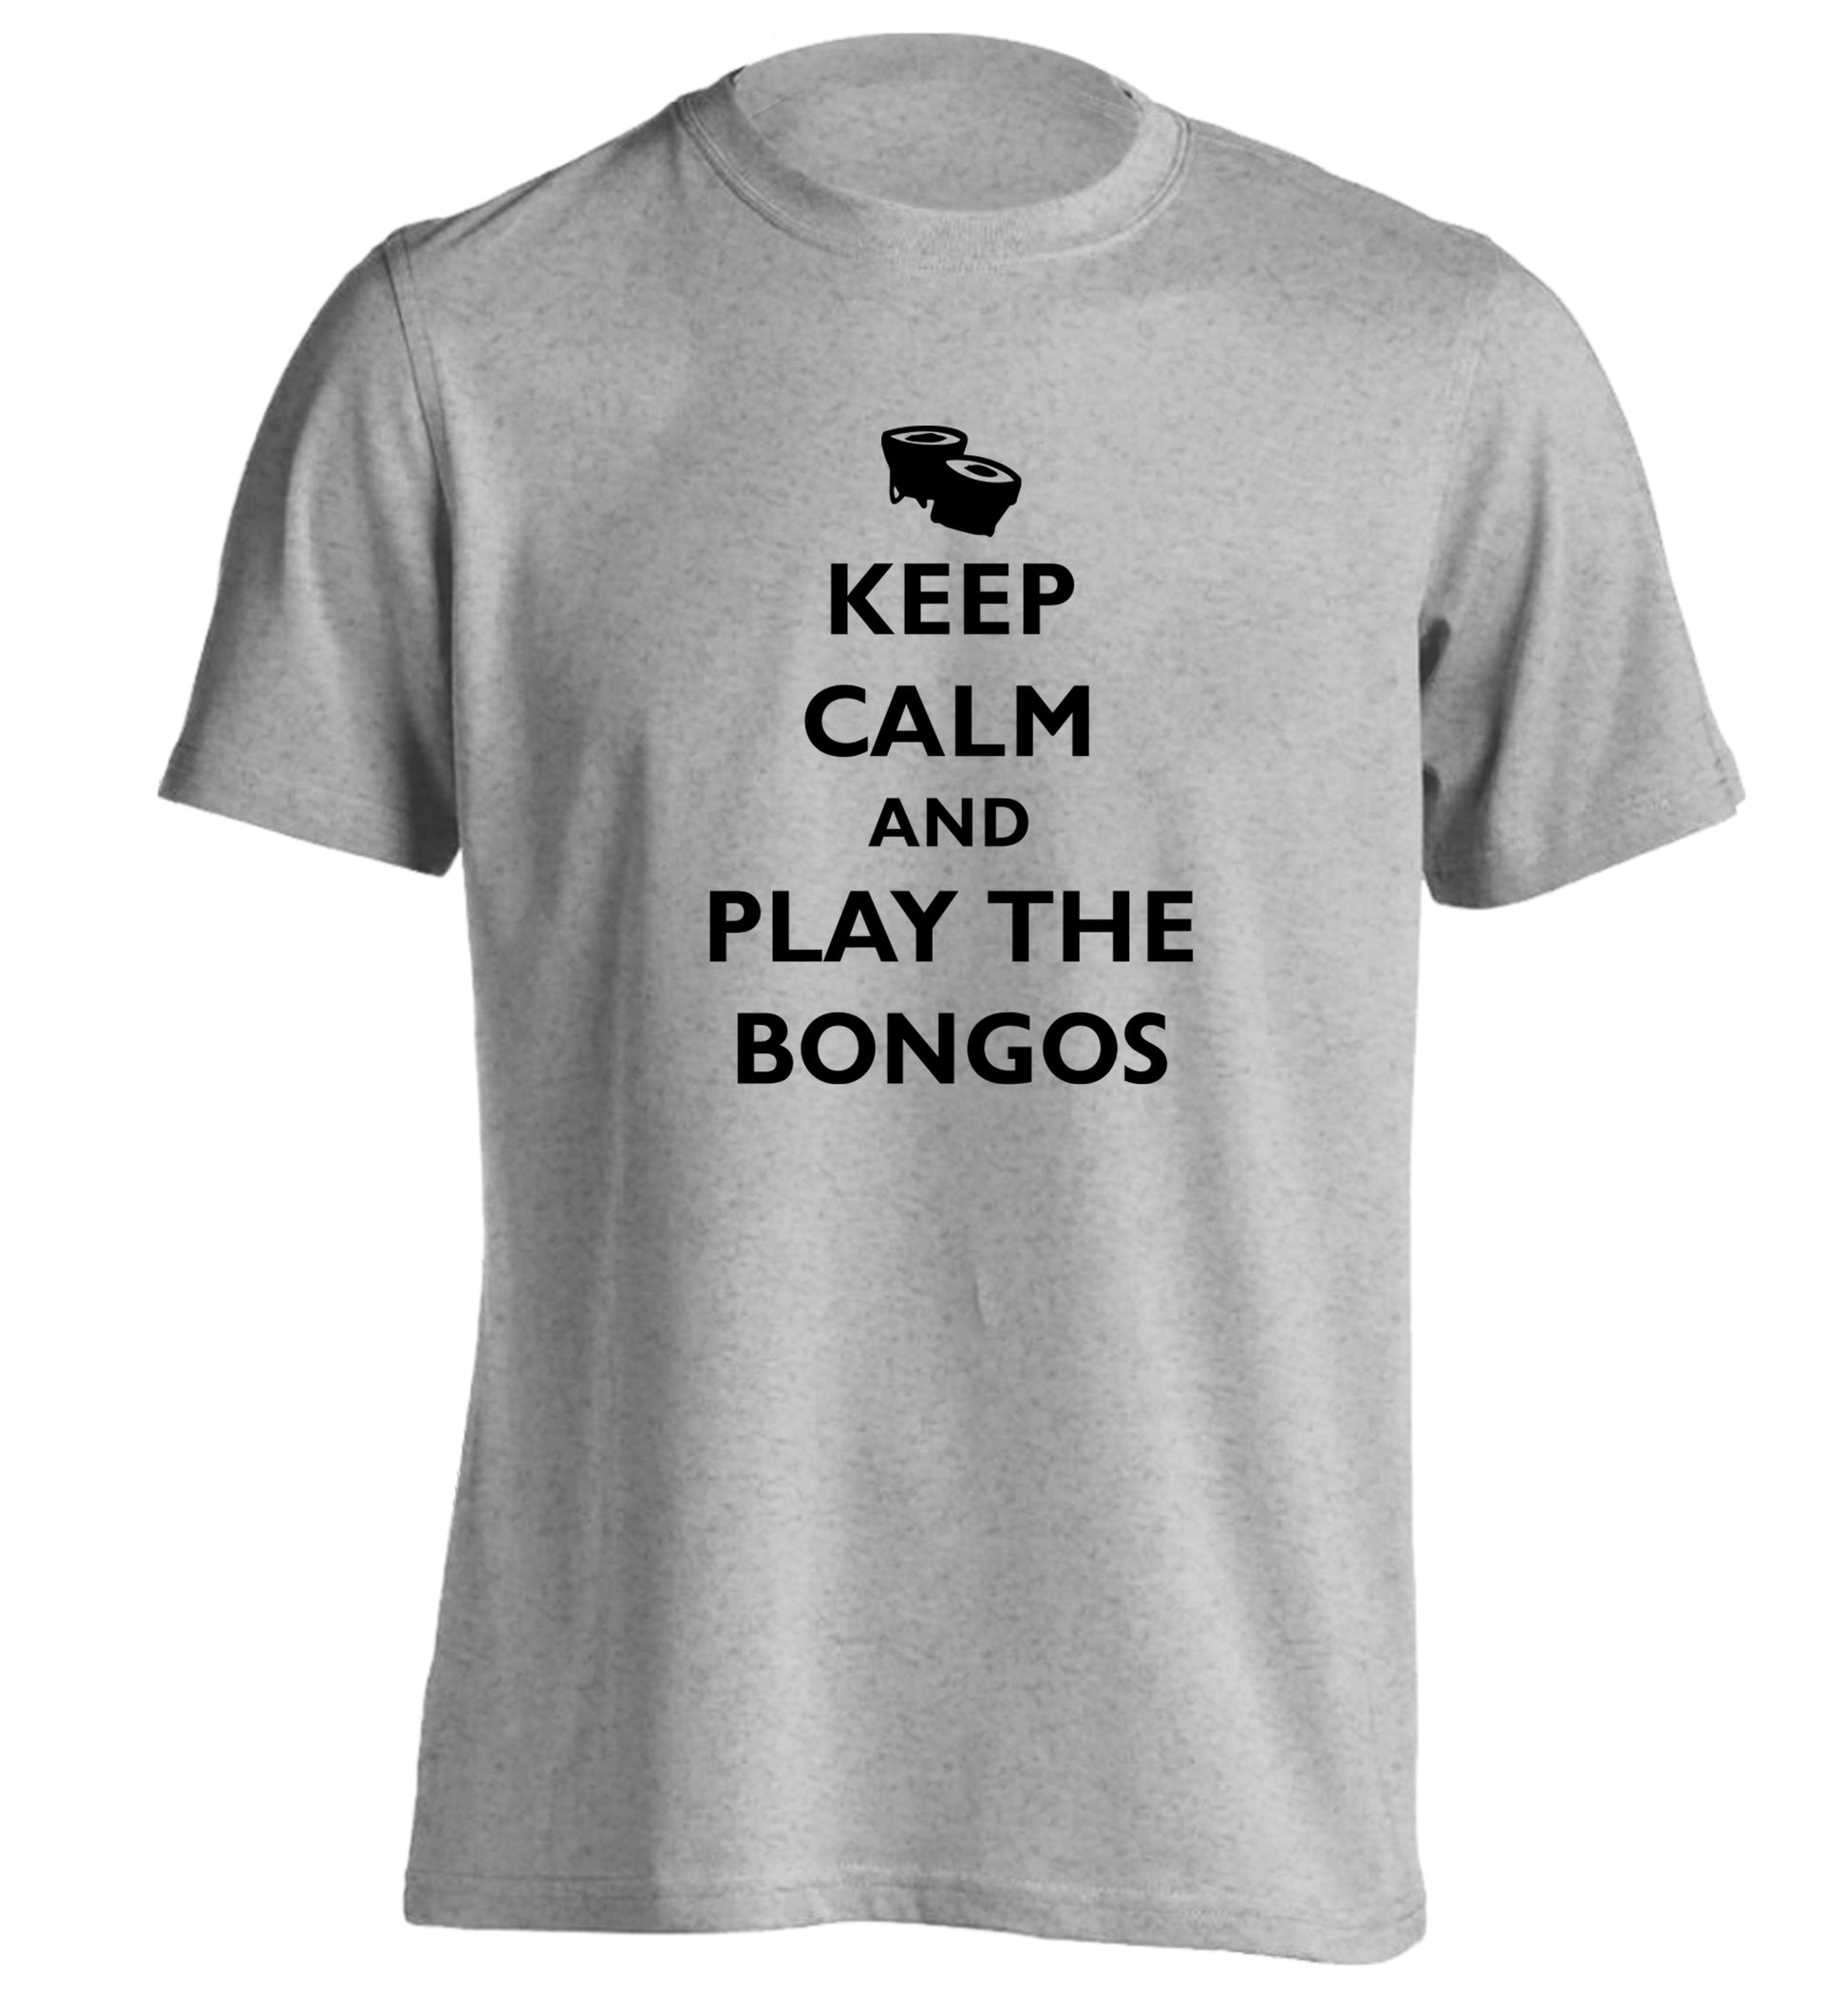 Keep calm and play the bongos adults unisex grey Tshirt 2XL